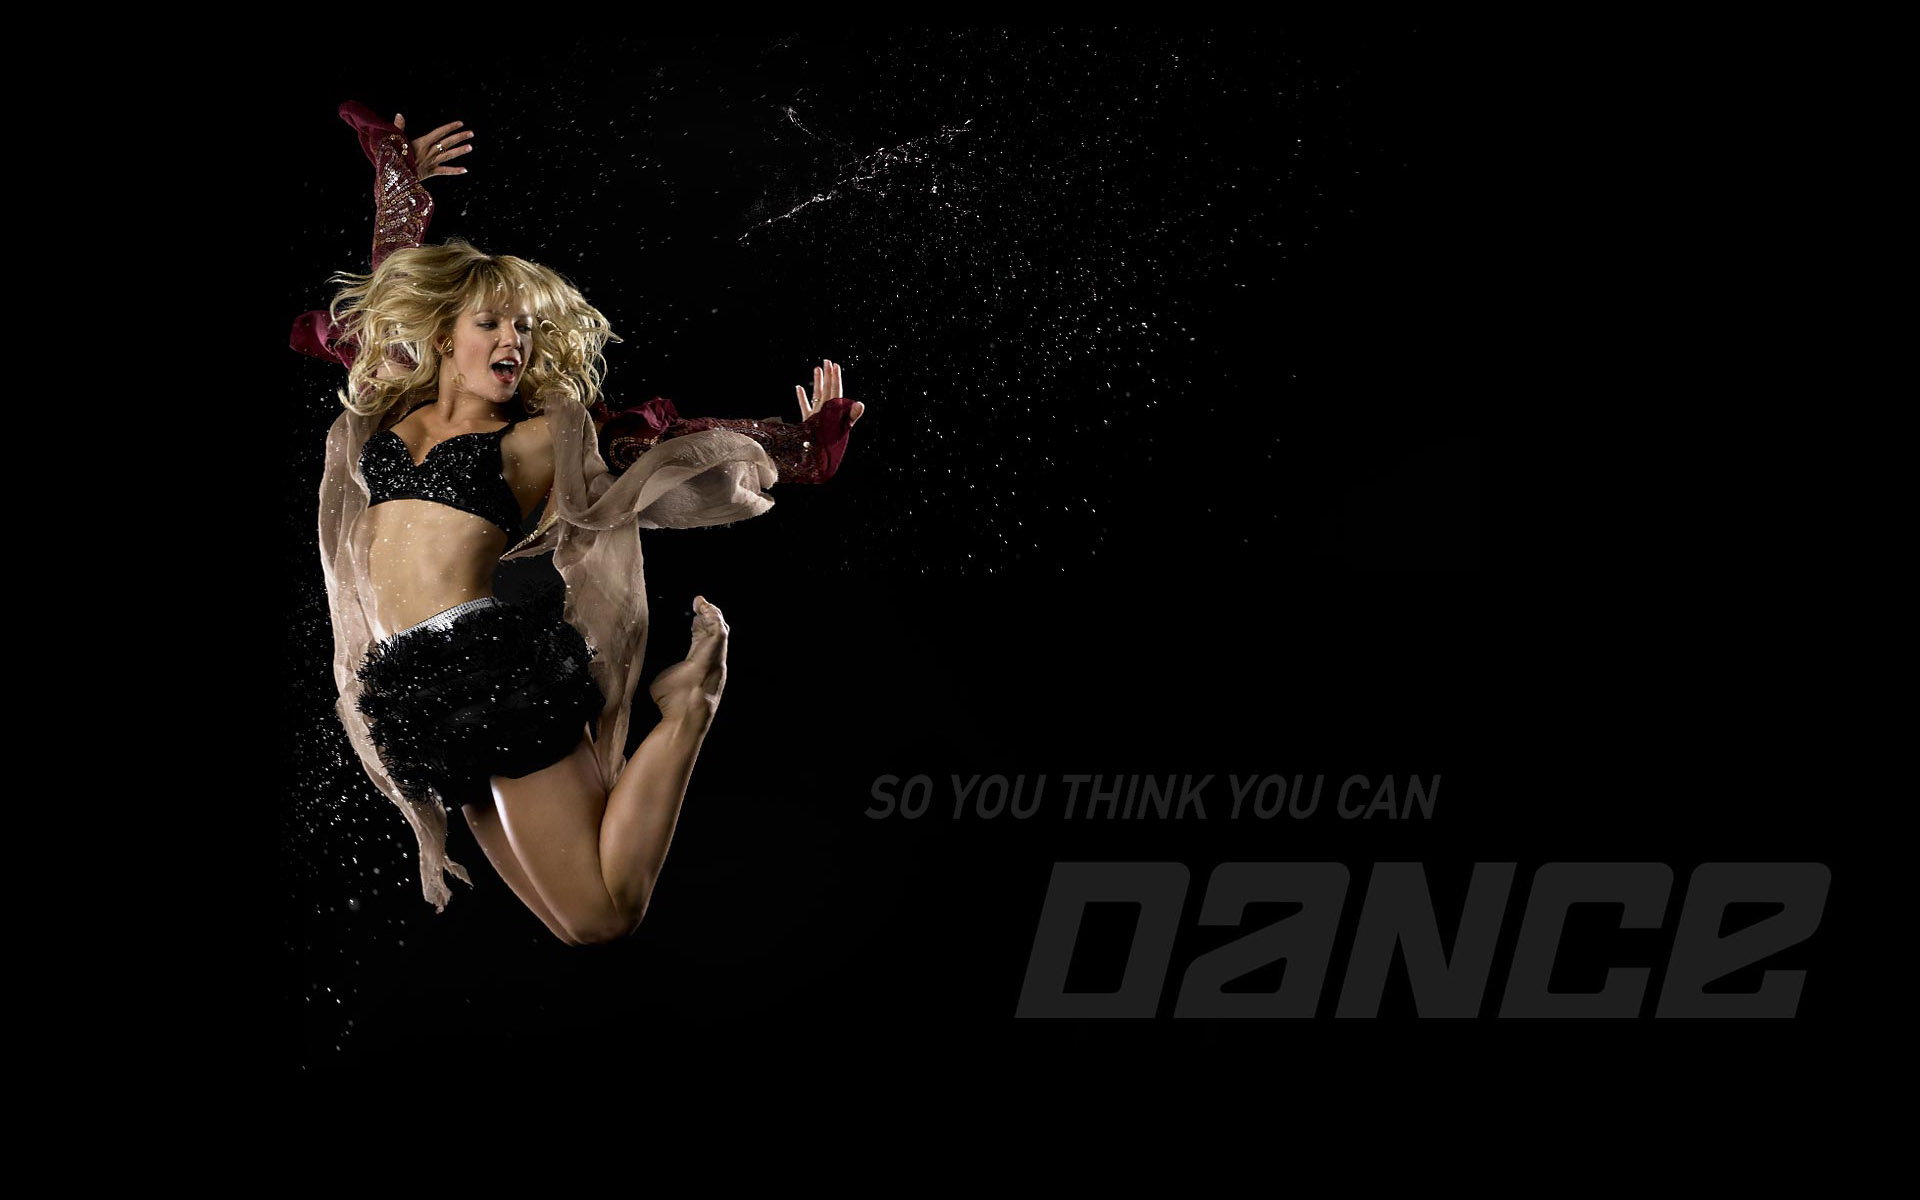 tv show, so you think you can dance, dance, dancer, dancing Free Stock Photo